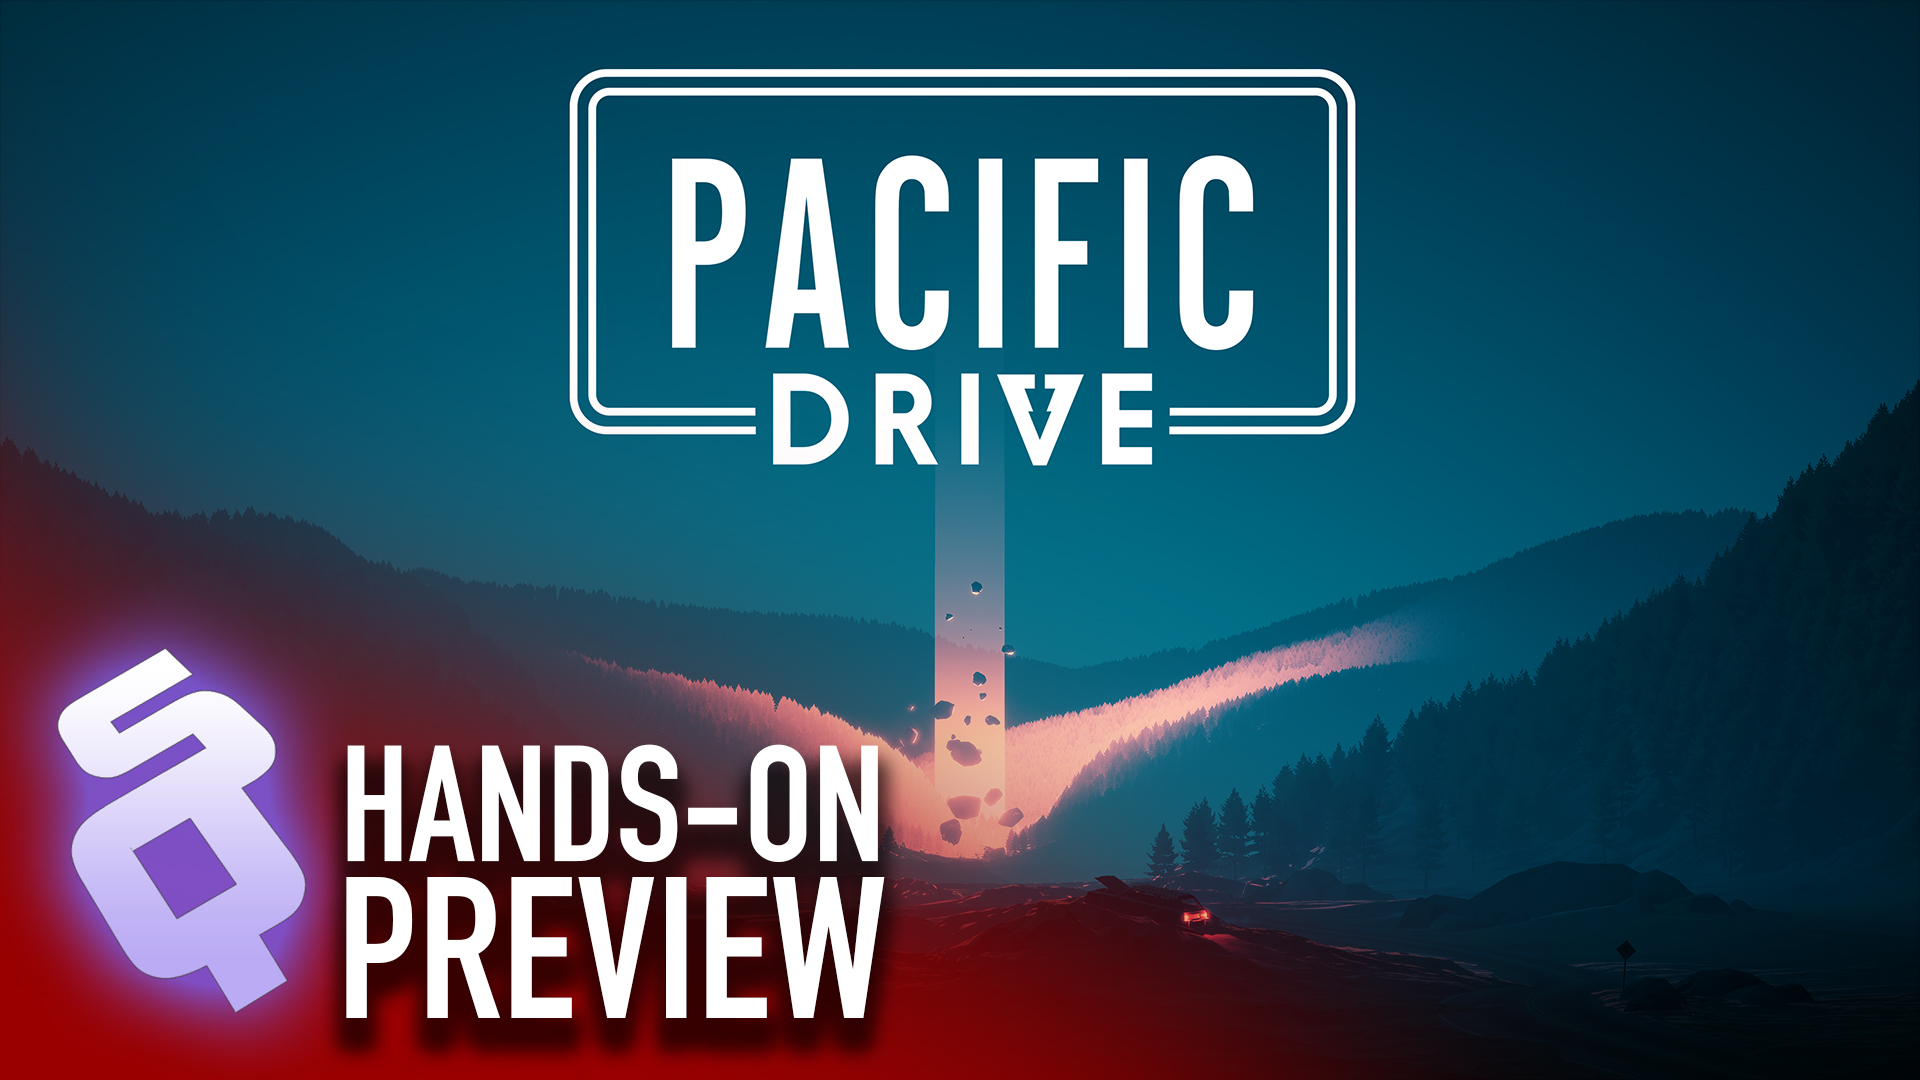 Pacific drive конвертер. Pacific Drive игра. Pacific Drive превью. Posifick Draiw. Pacific Drive РГВ.